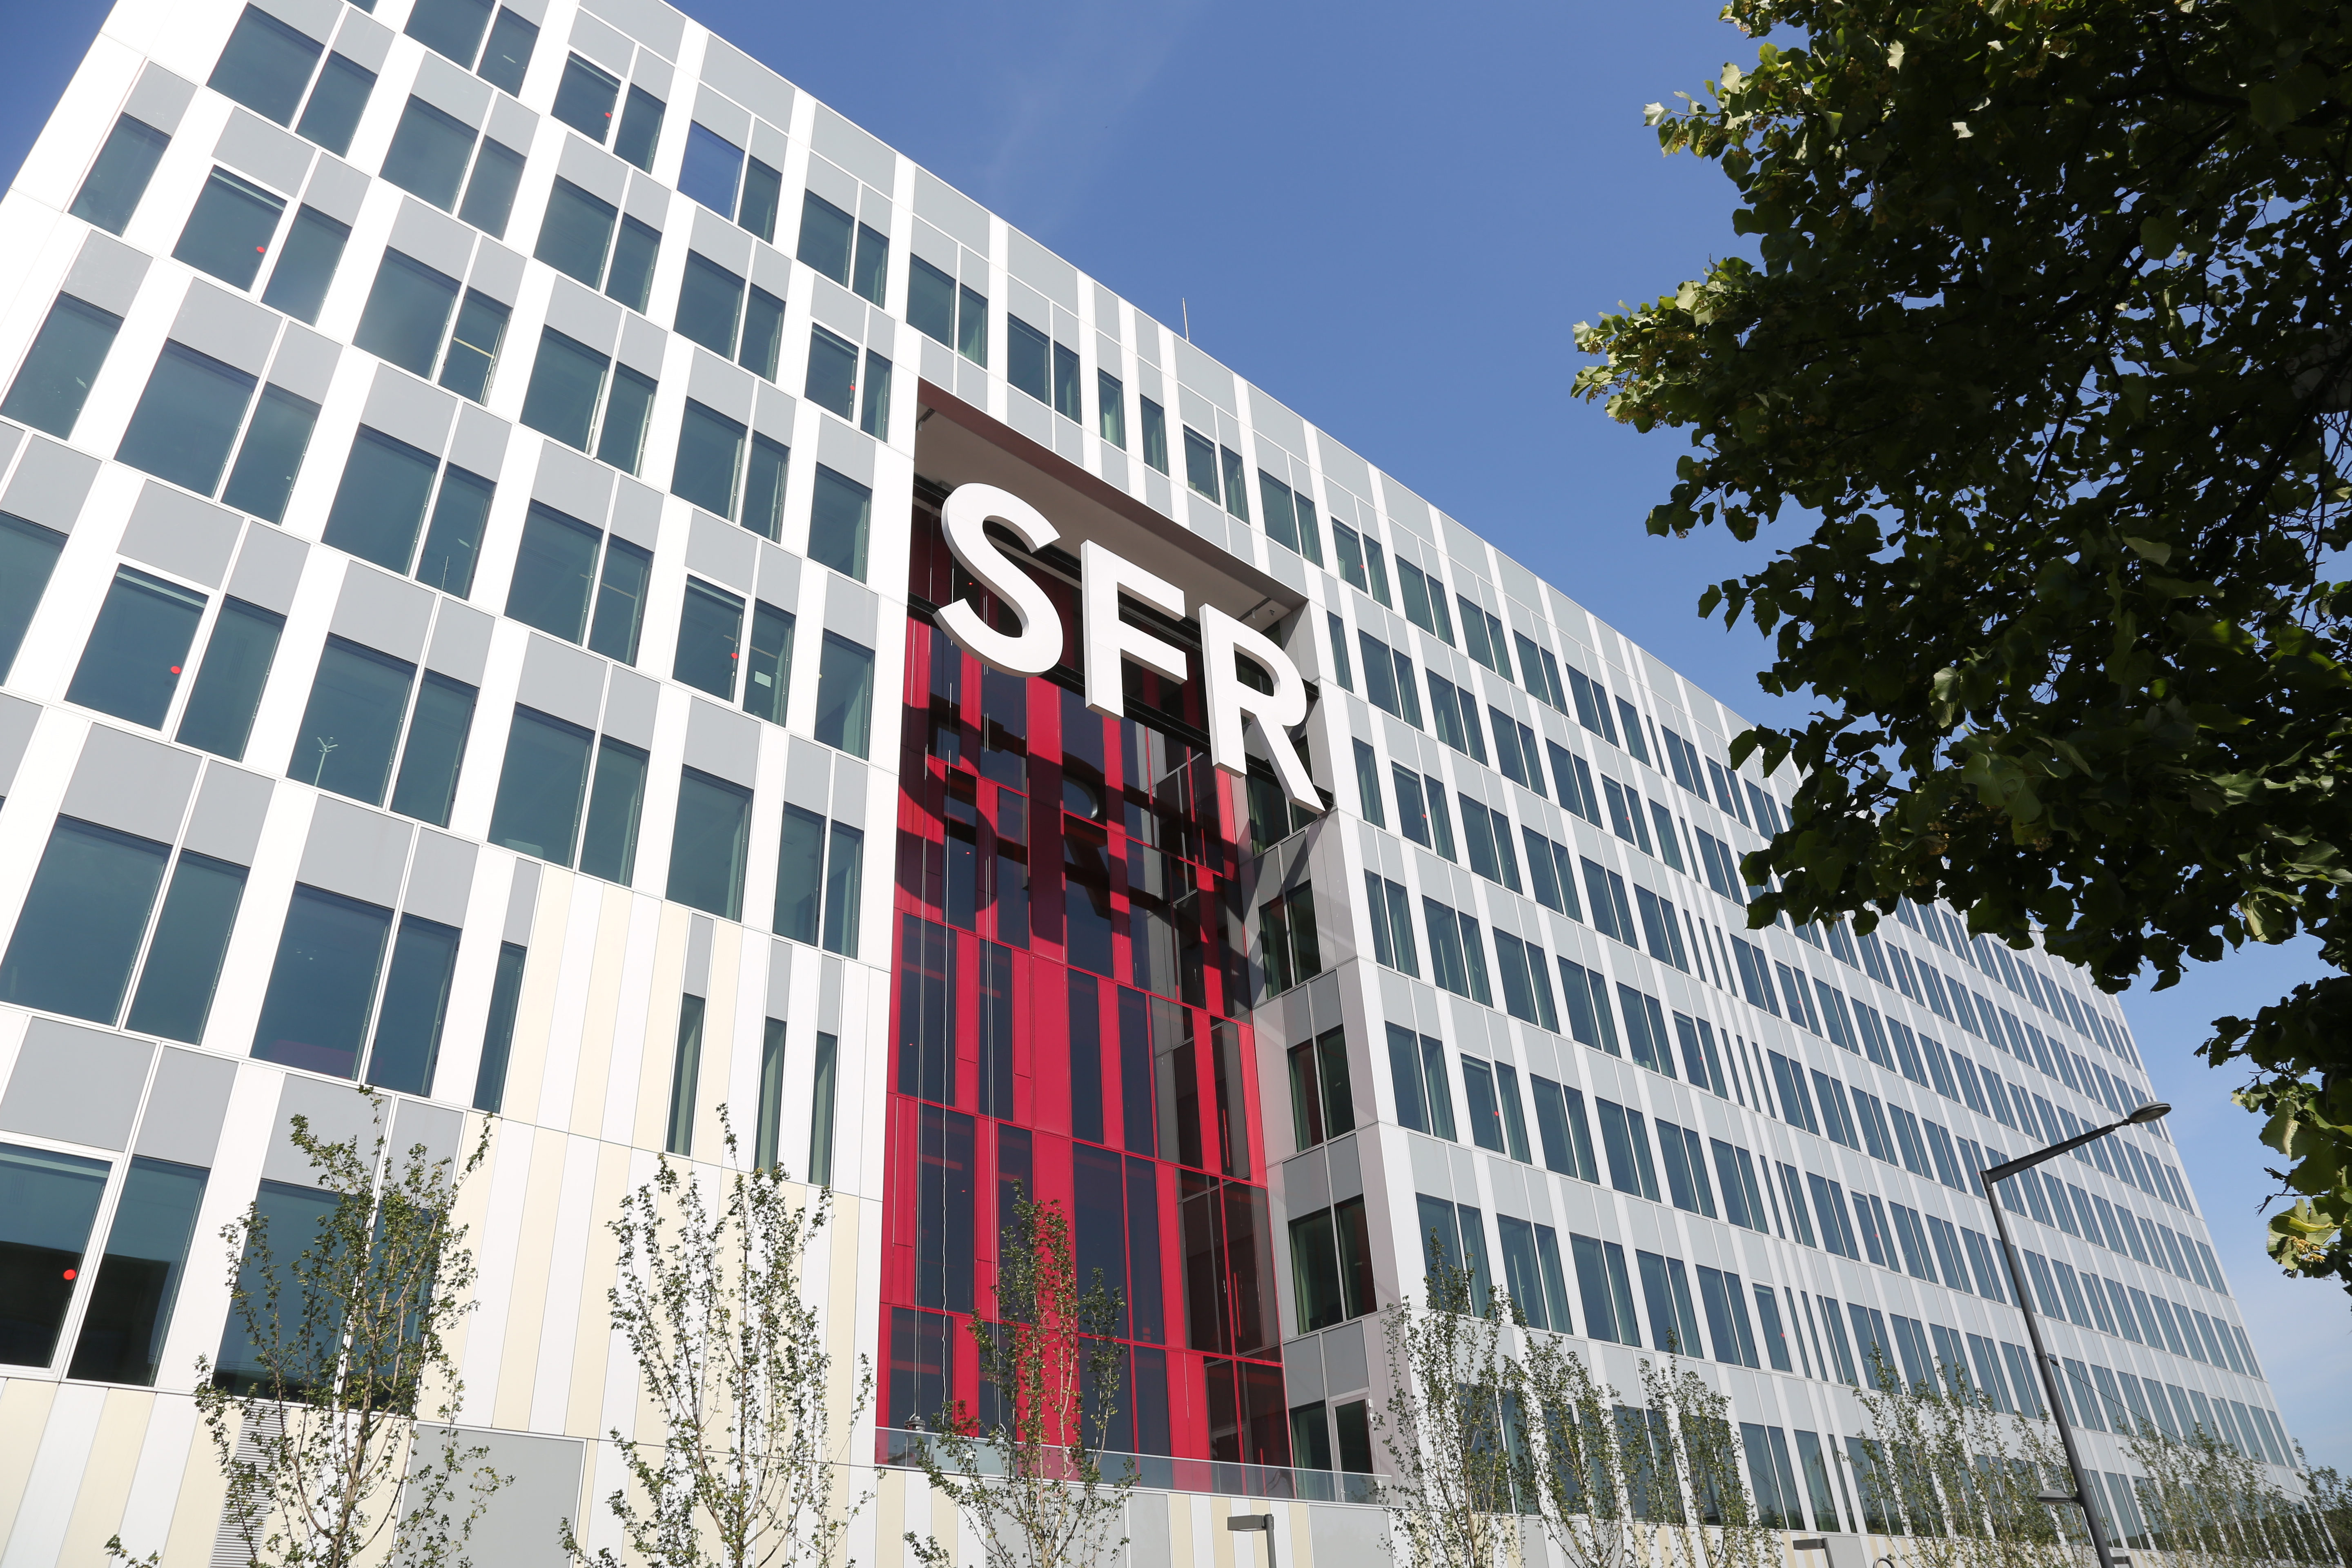 SFR HQ building